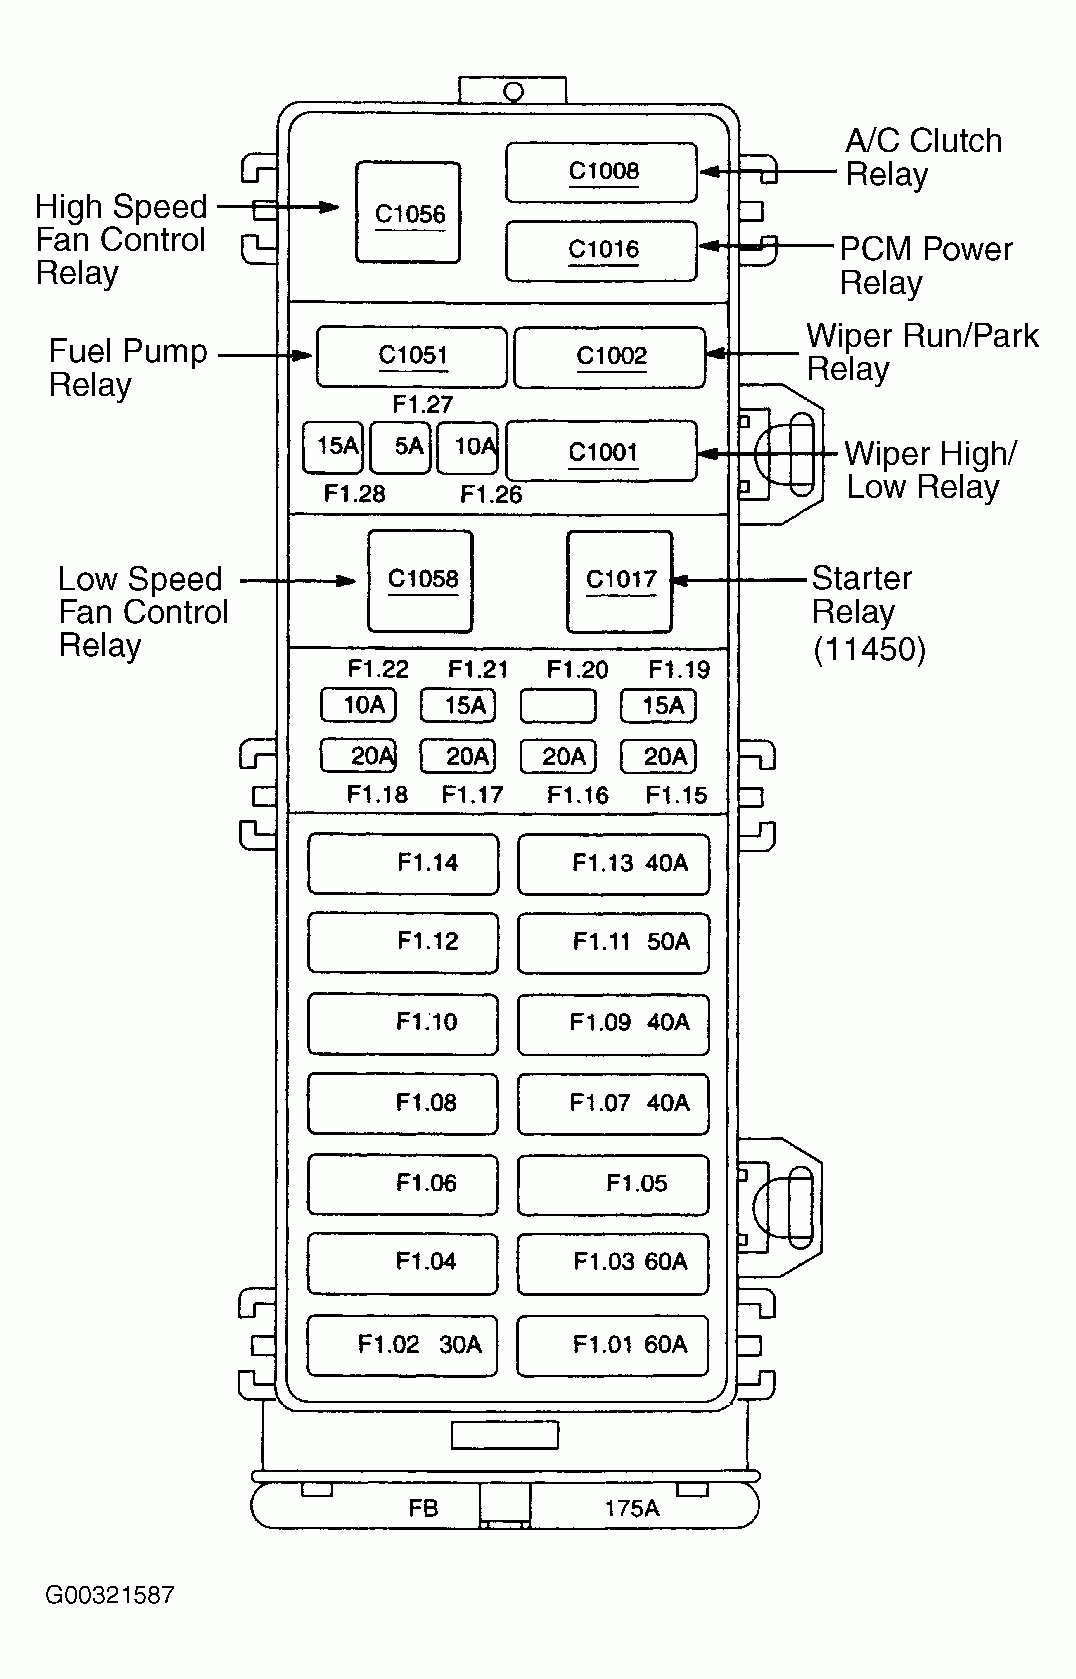 Diagram] Ford Taurus Fuse Diagram Full Version Hd Quality